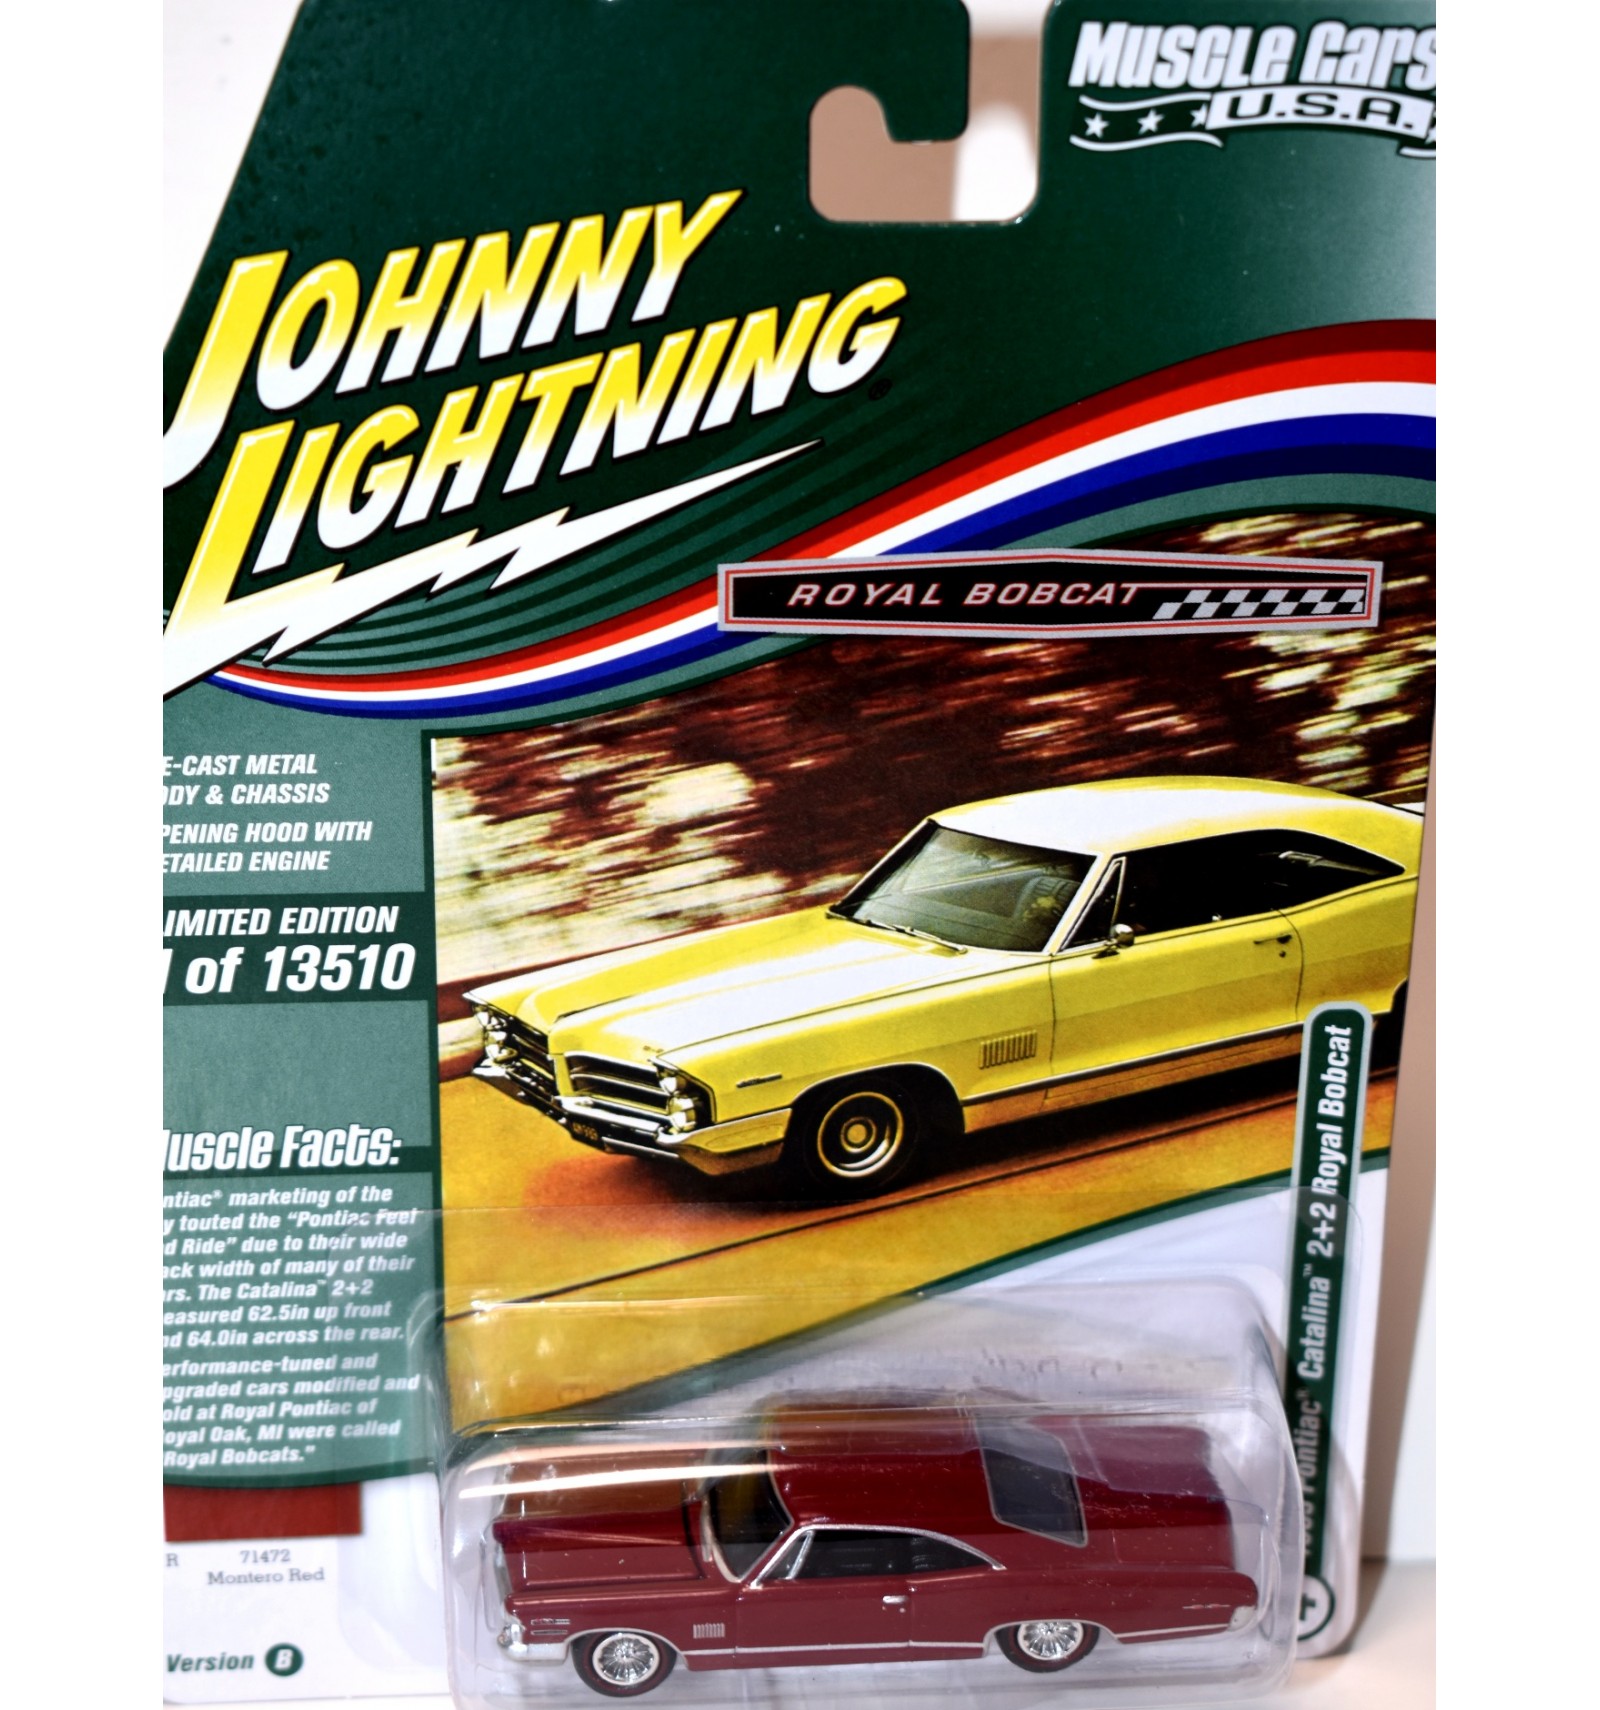 Johnny Lightning Muscle Cars USA - 1965 Pontiac Catalina 2+2 Royal Bobcat -  Global Diecast Direct